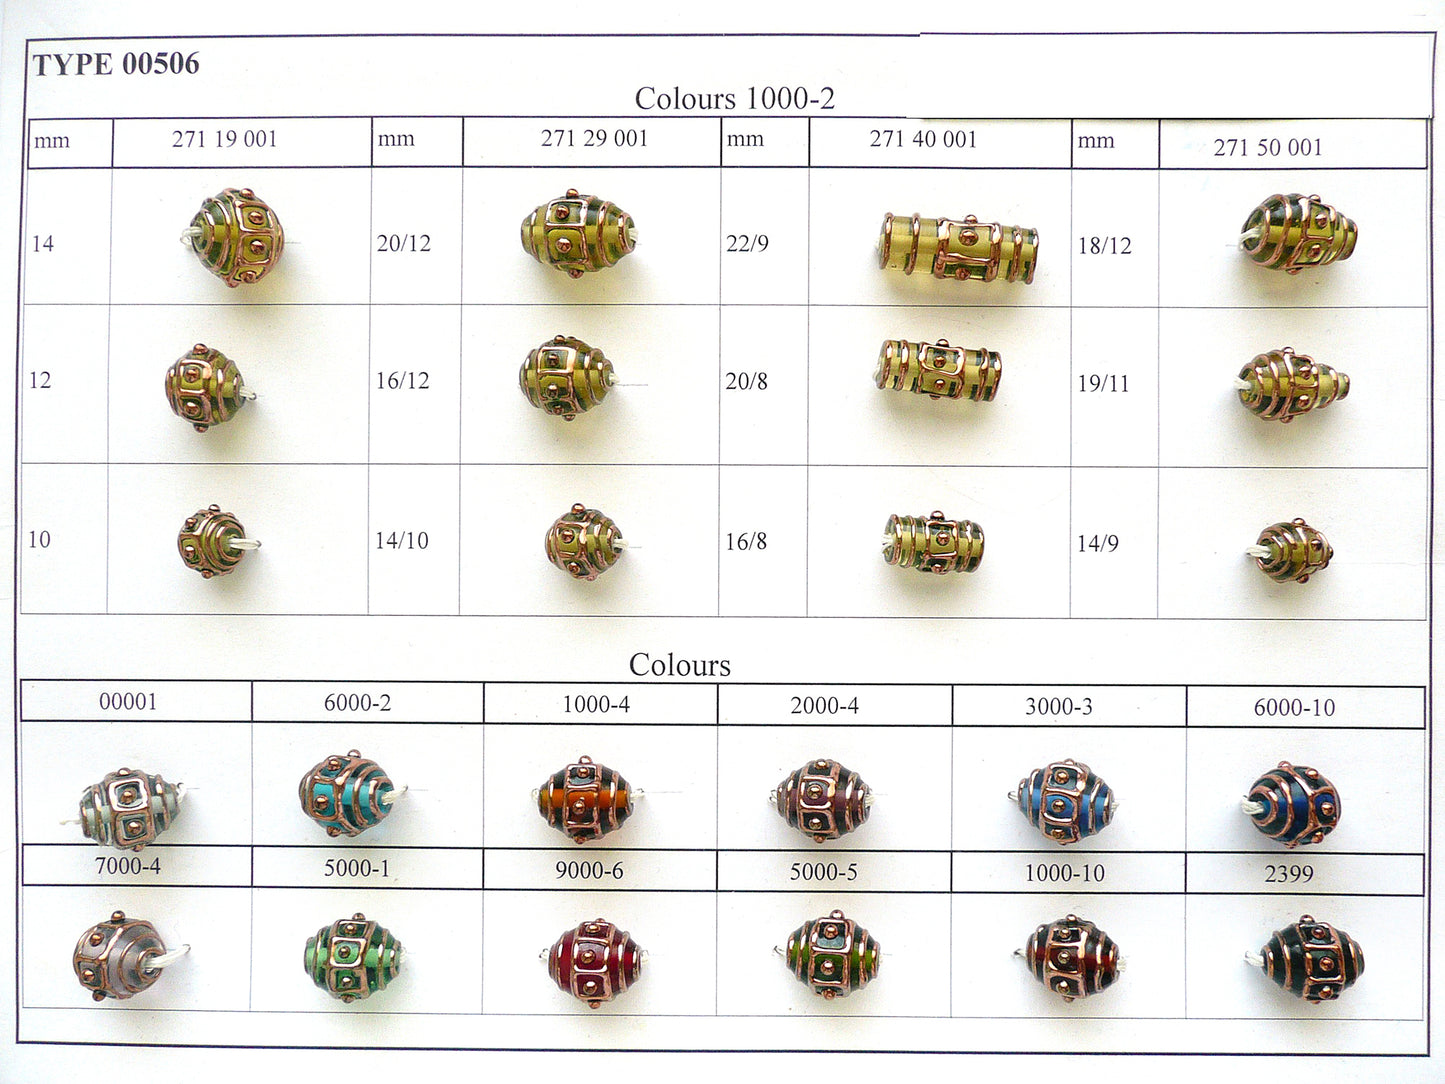 30 pcs Lampwork Beads 506 / Oval (271-29-001), Handmade, Preciosa Glass, Czech Republic